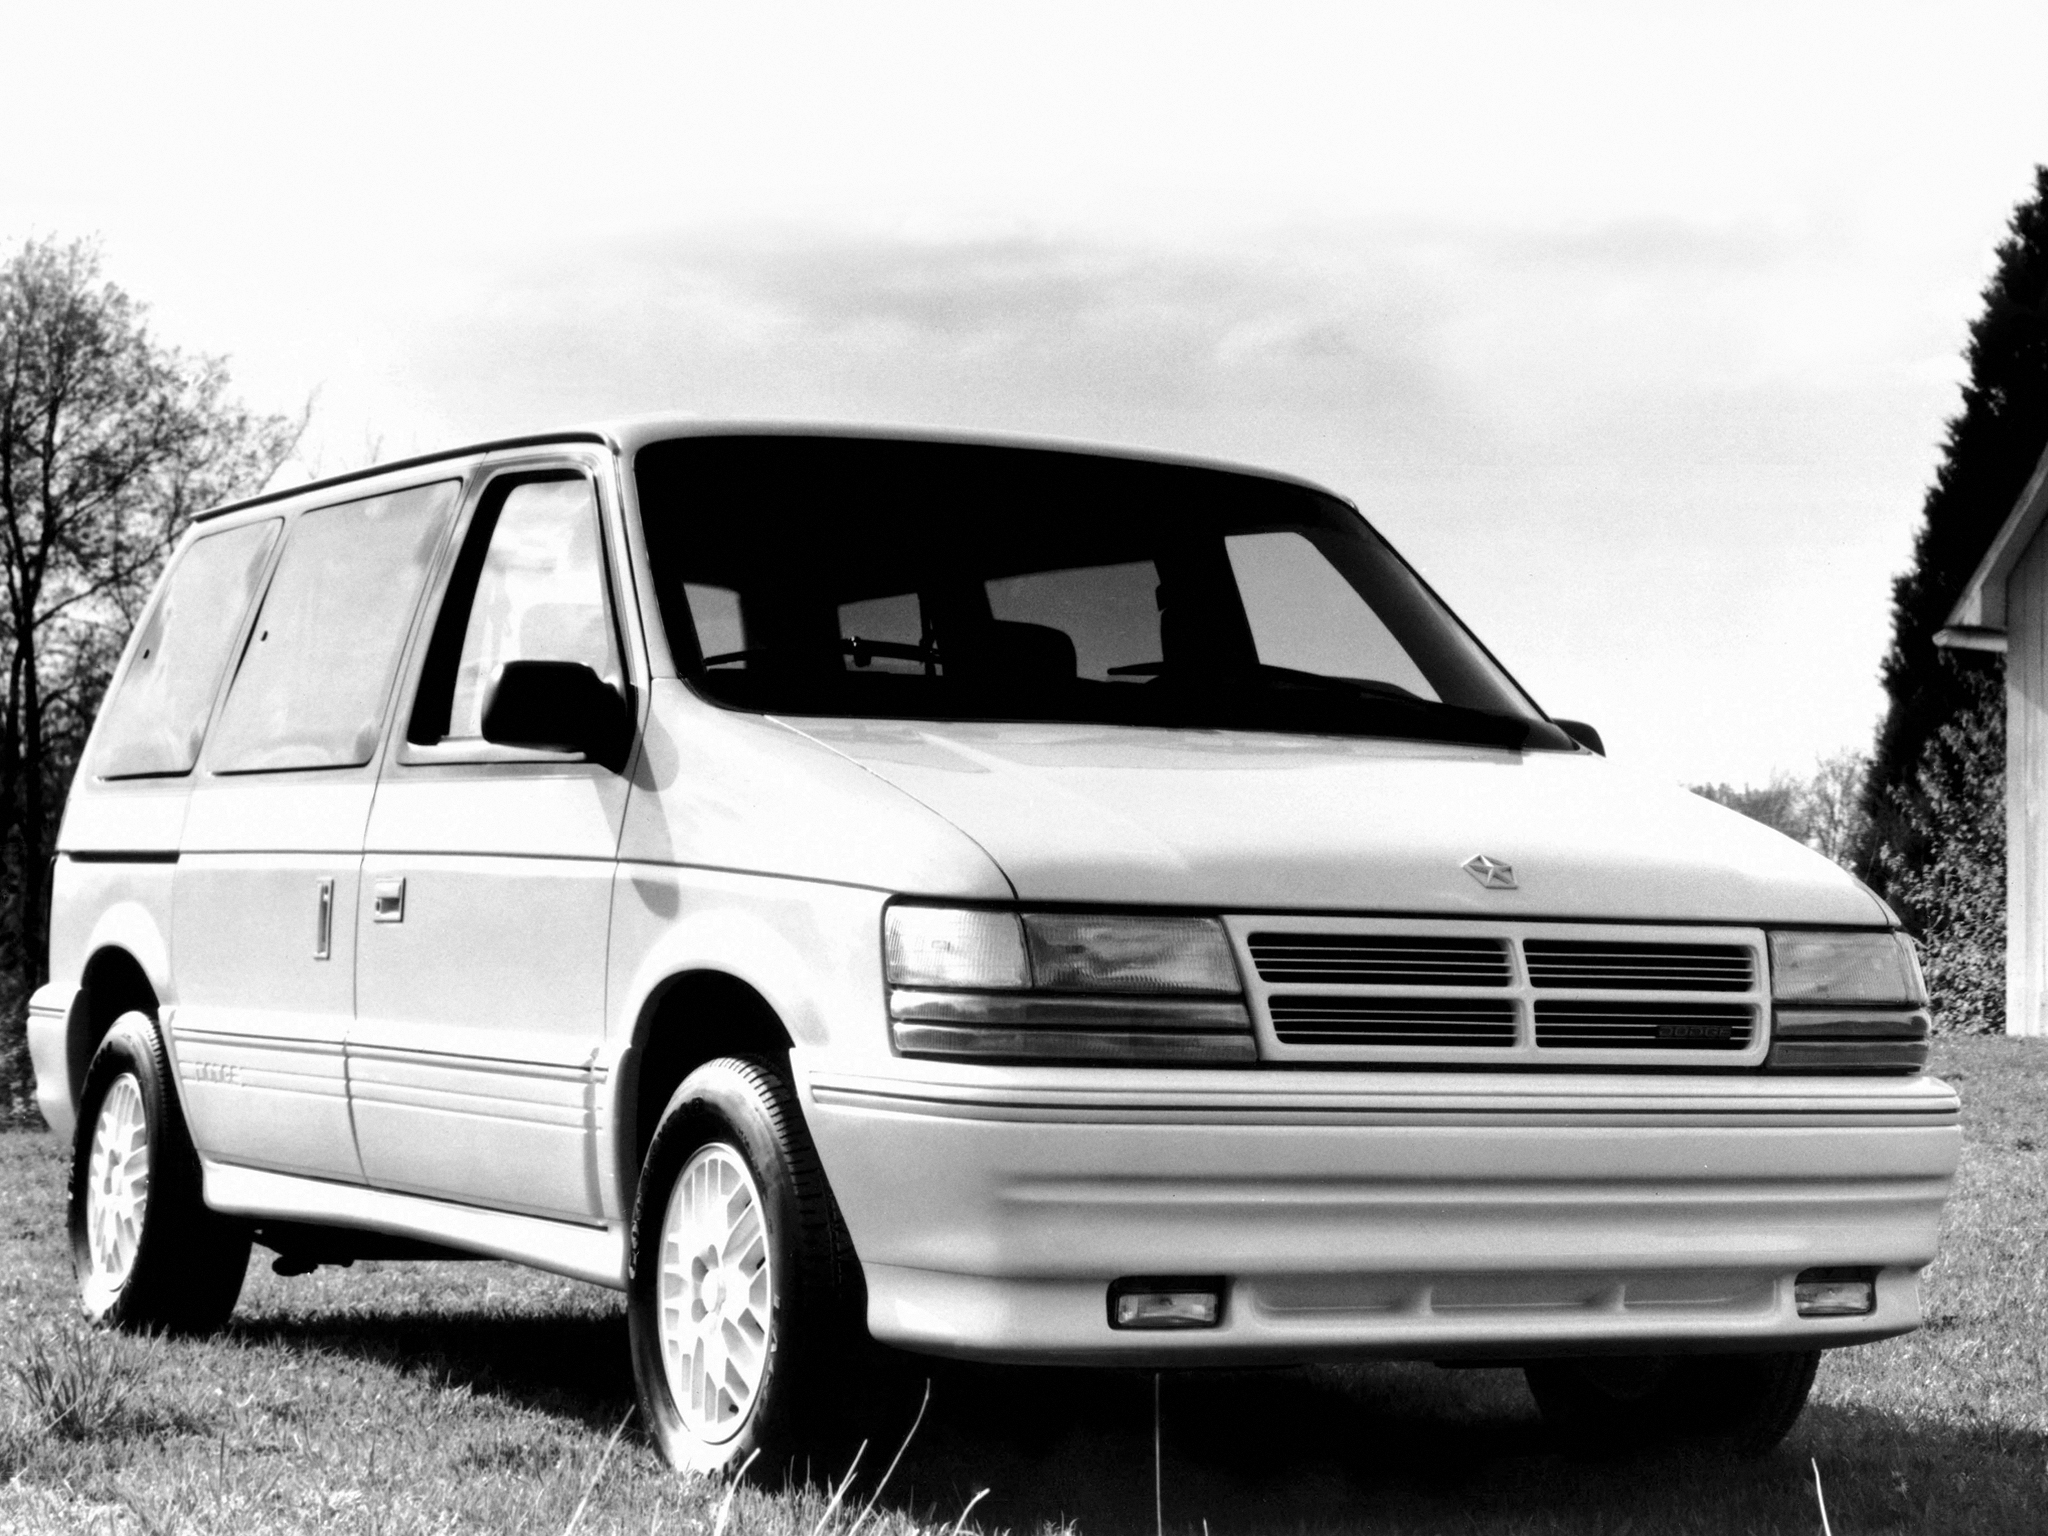 Dodge Caravan 1991 - Dodge Caravan Es 1991 - HD Wallpaper 